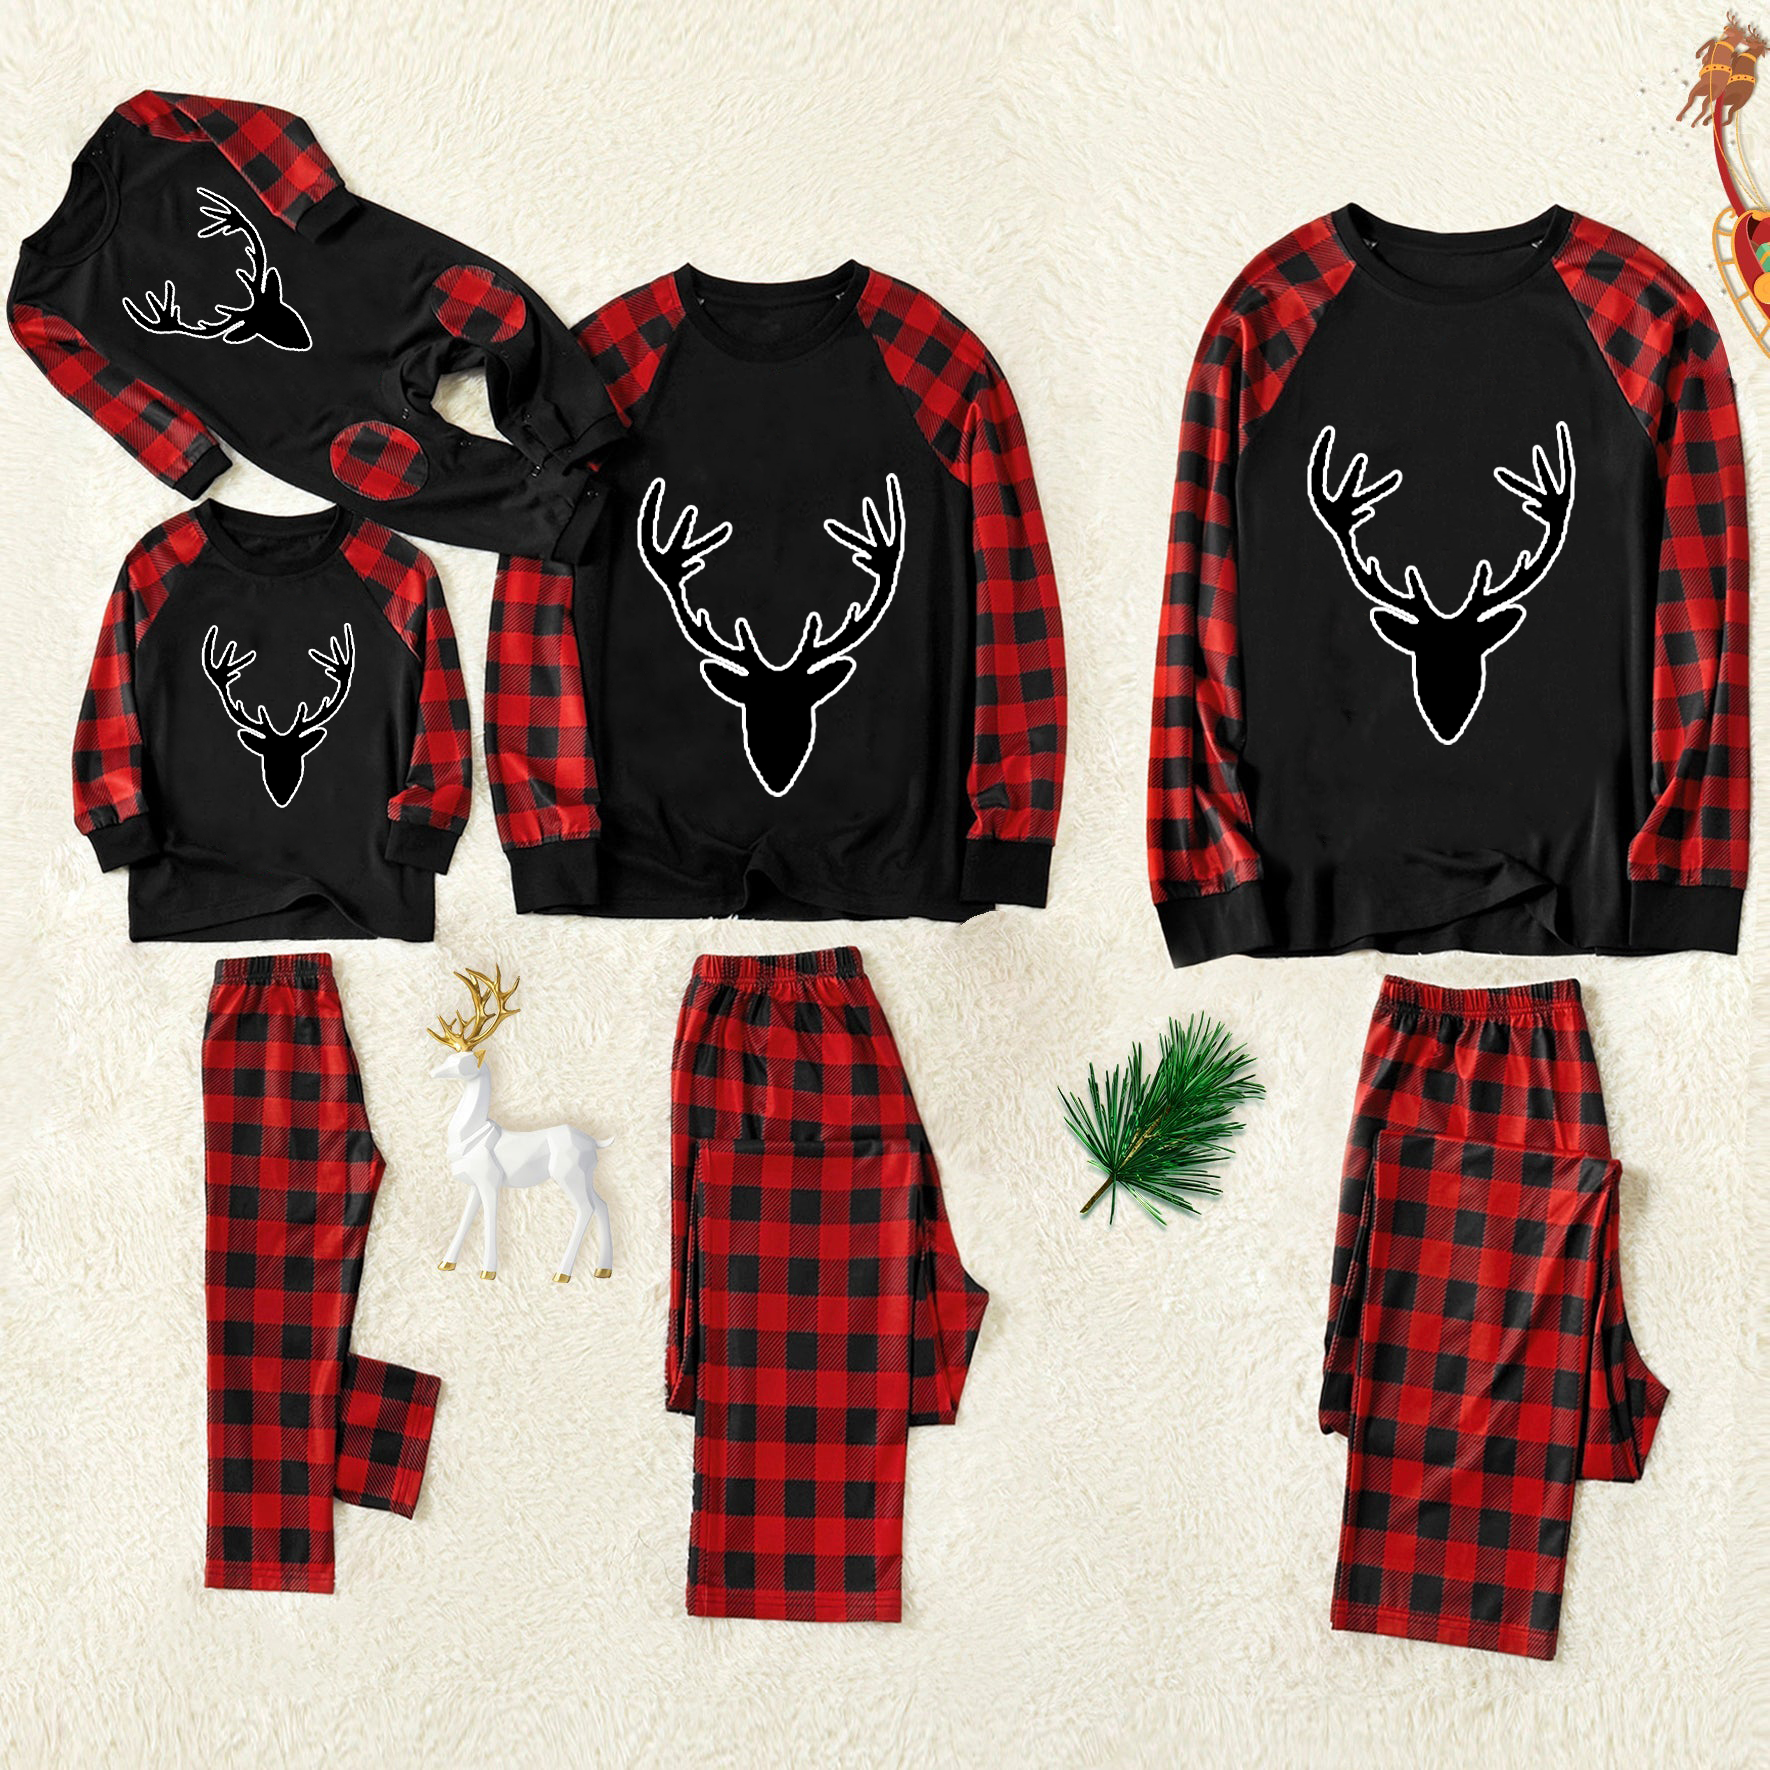 Christmas Cute Cartoon Deer Prints and simple Prints Contrast Black top and Black & Red Plaid Pants Family Matching Pajamas Set With Dog Bandana